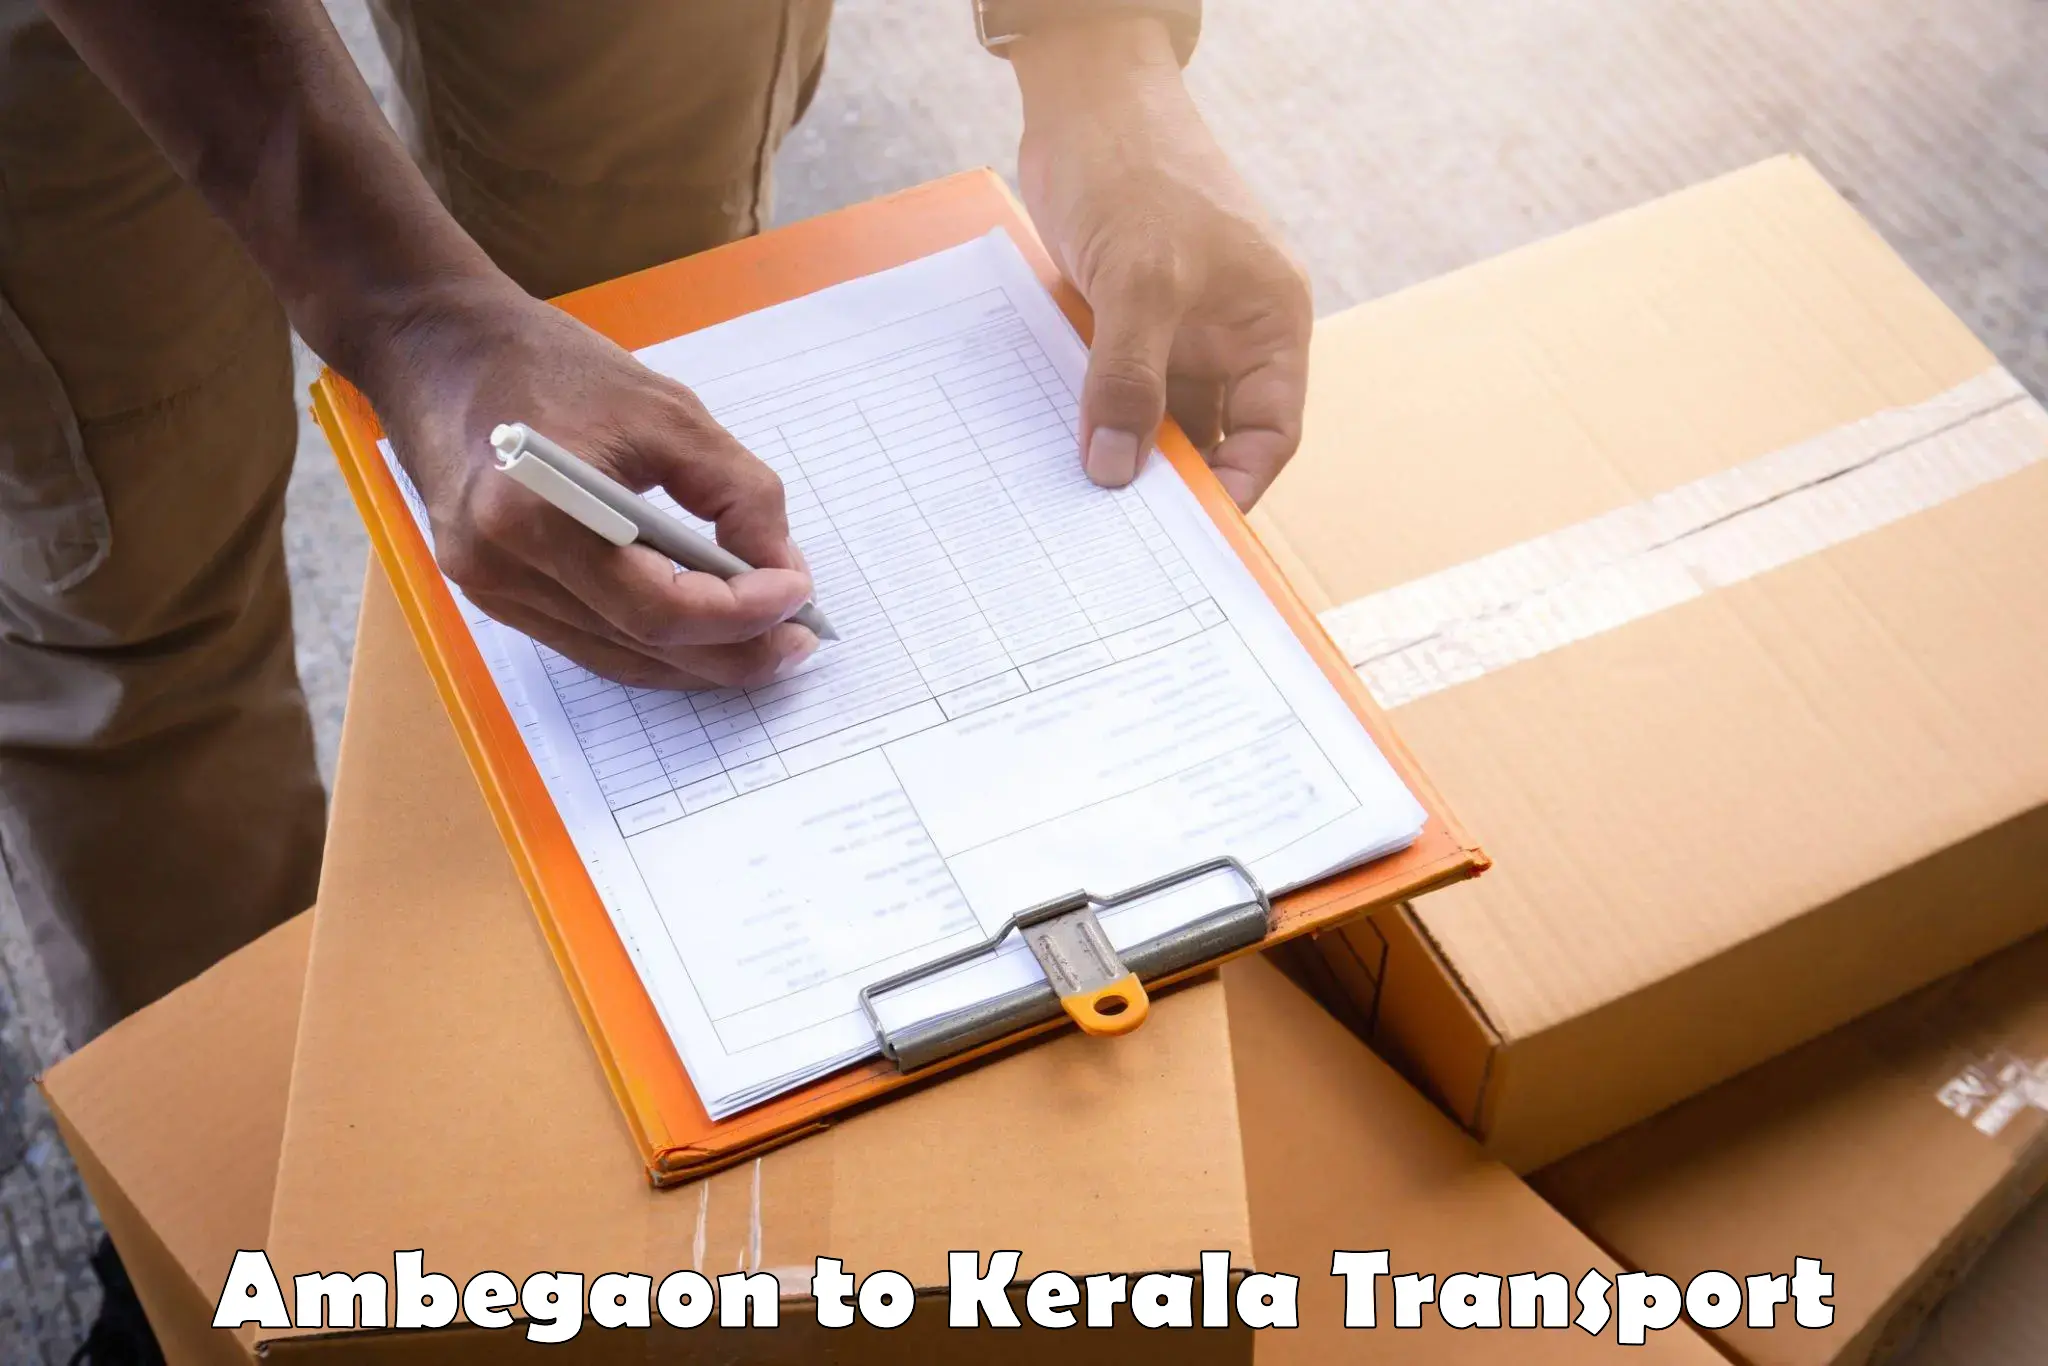 Truck transport companies in India Ambegaon to Nedumangad